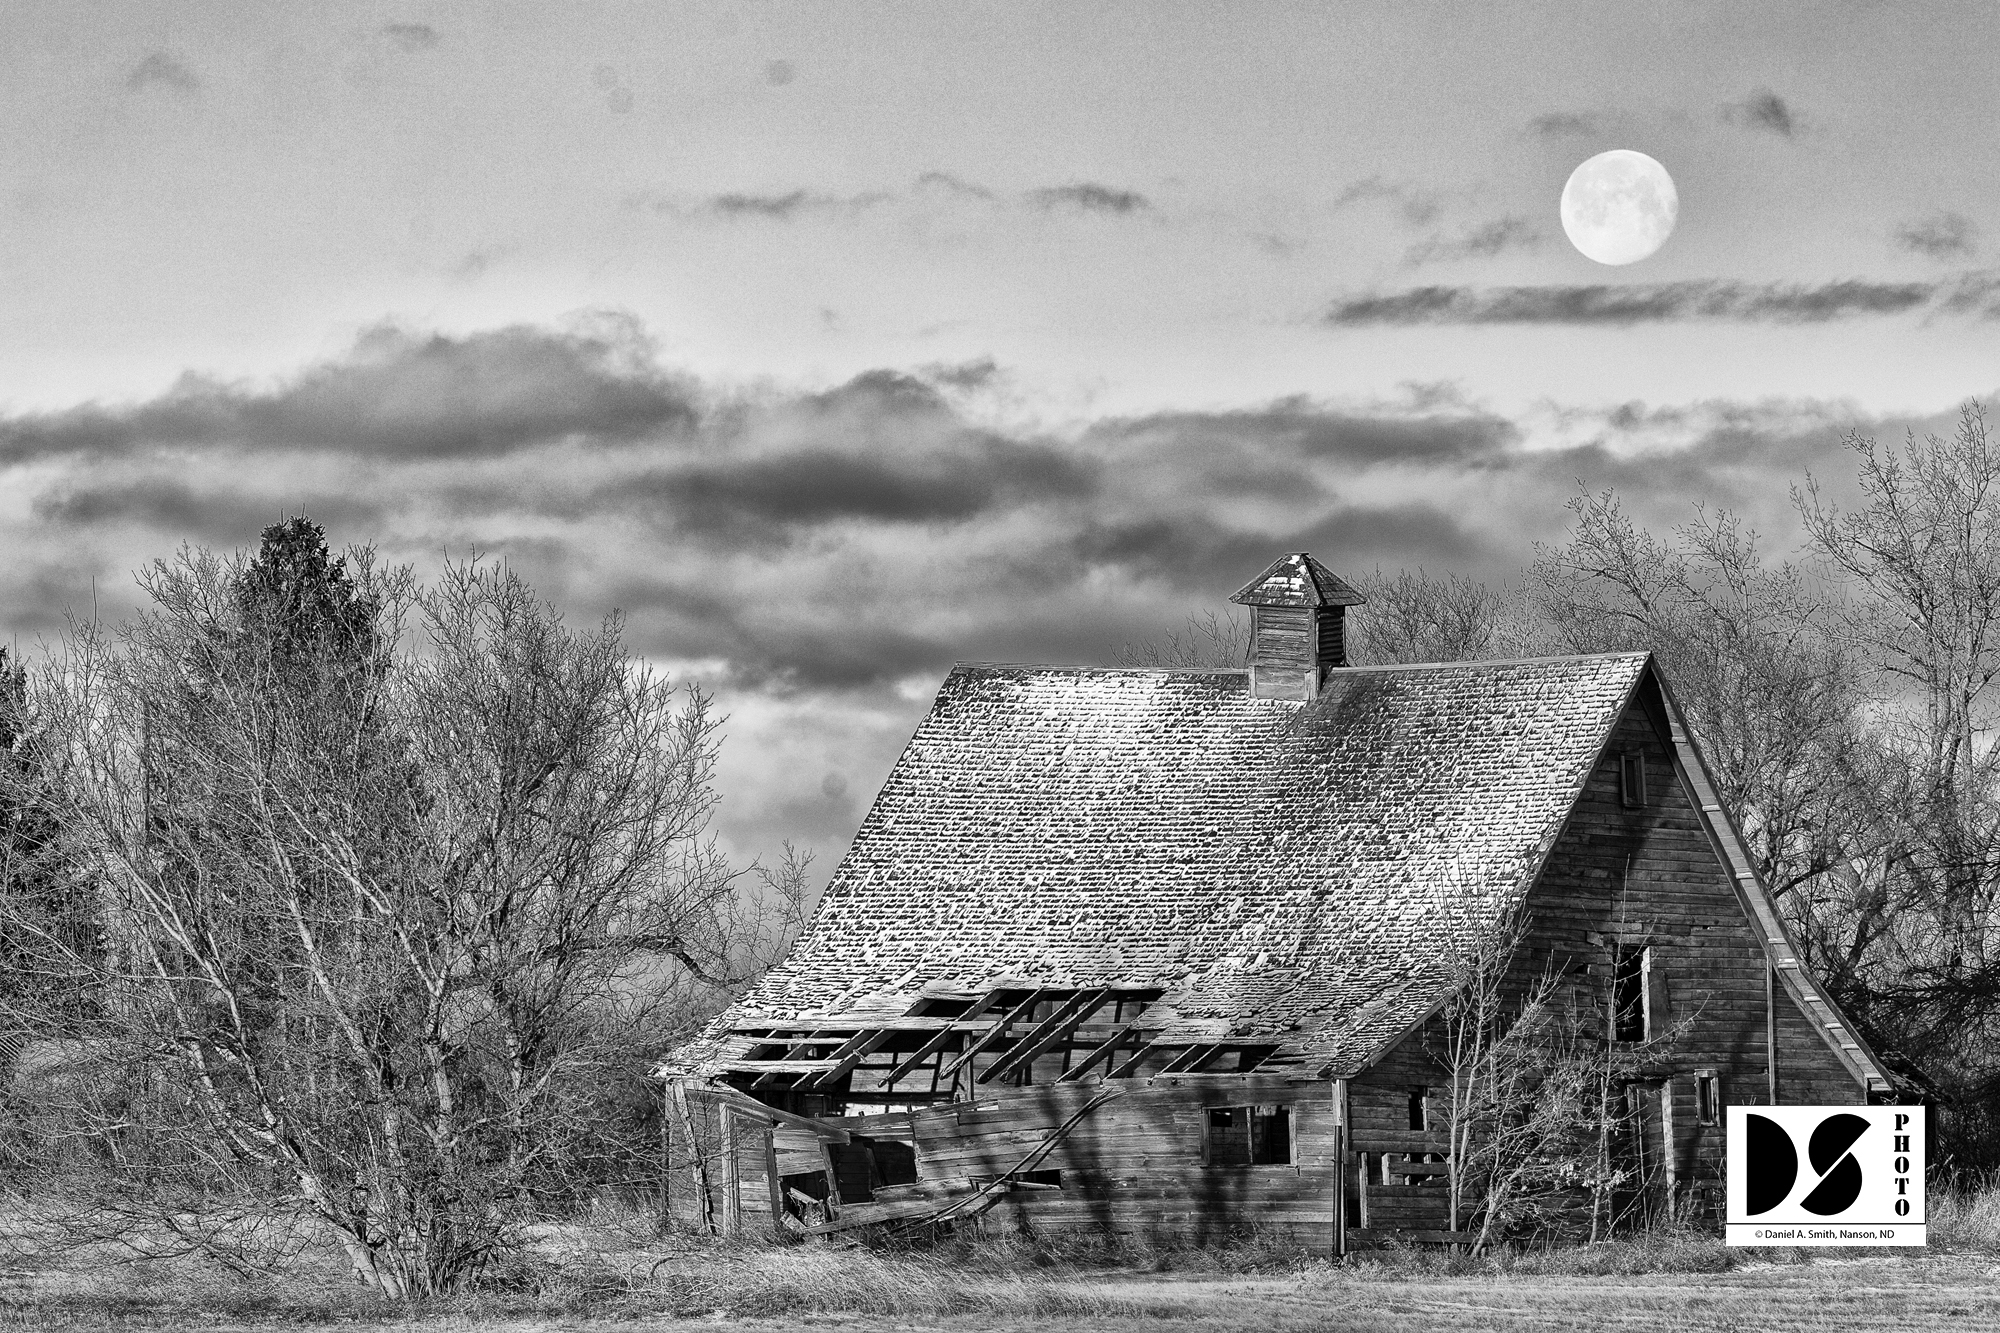 Moonset, North Dakota ©2020 Daniel A. Smith